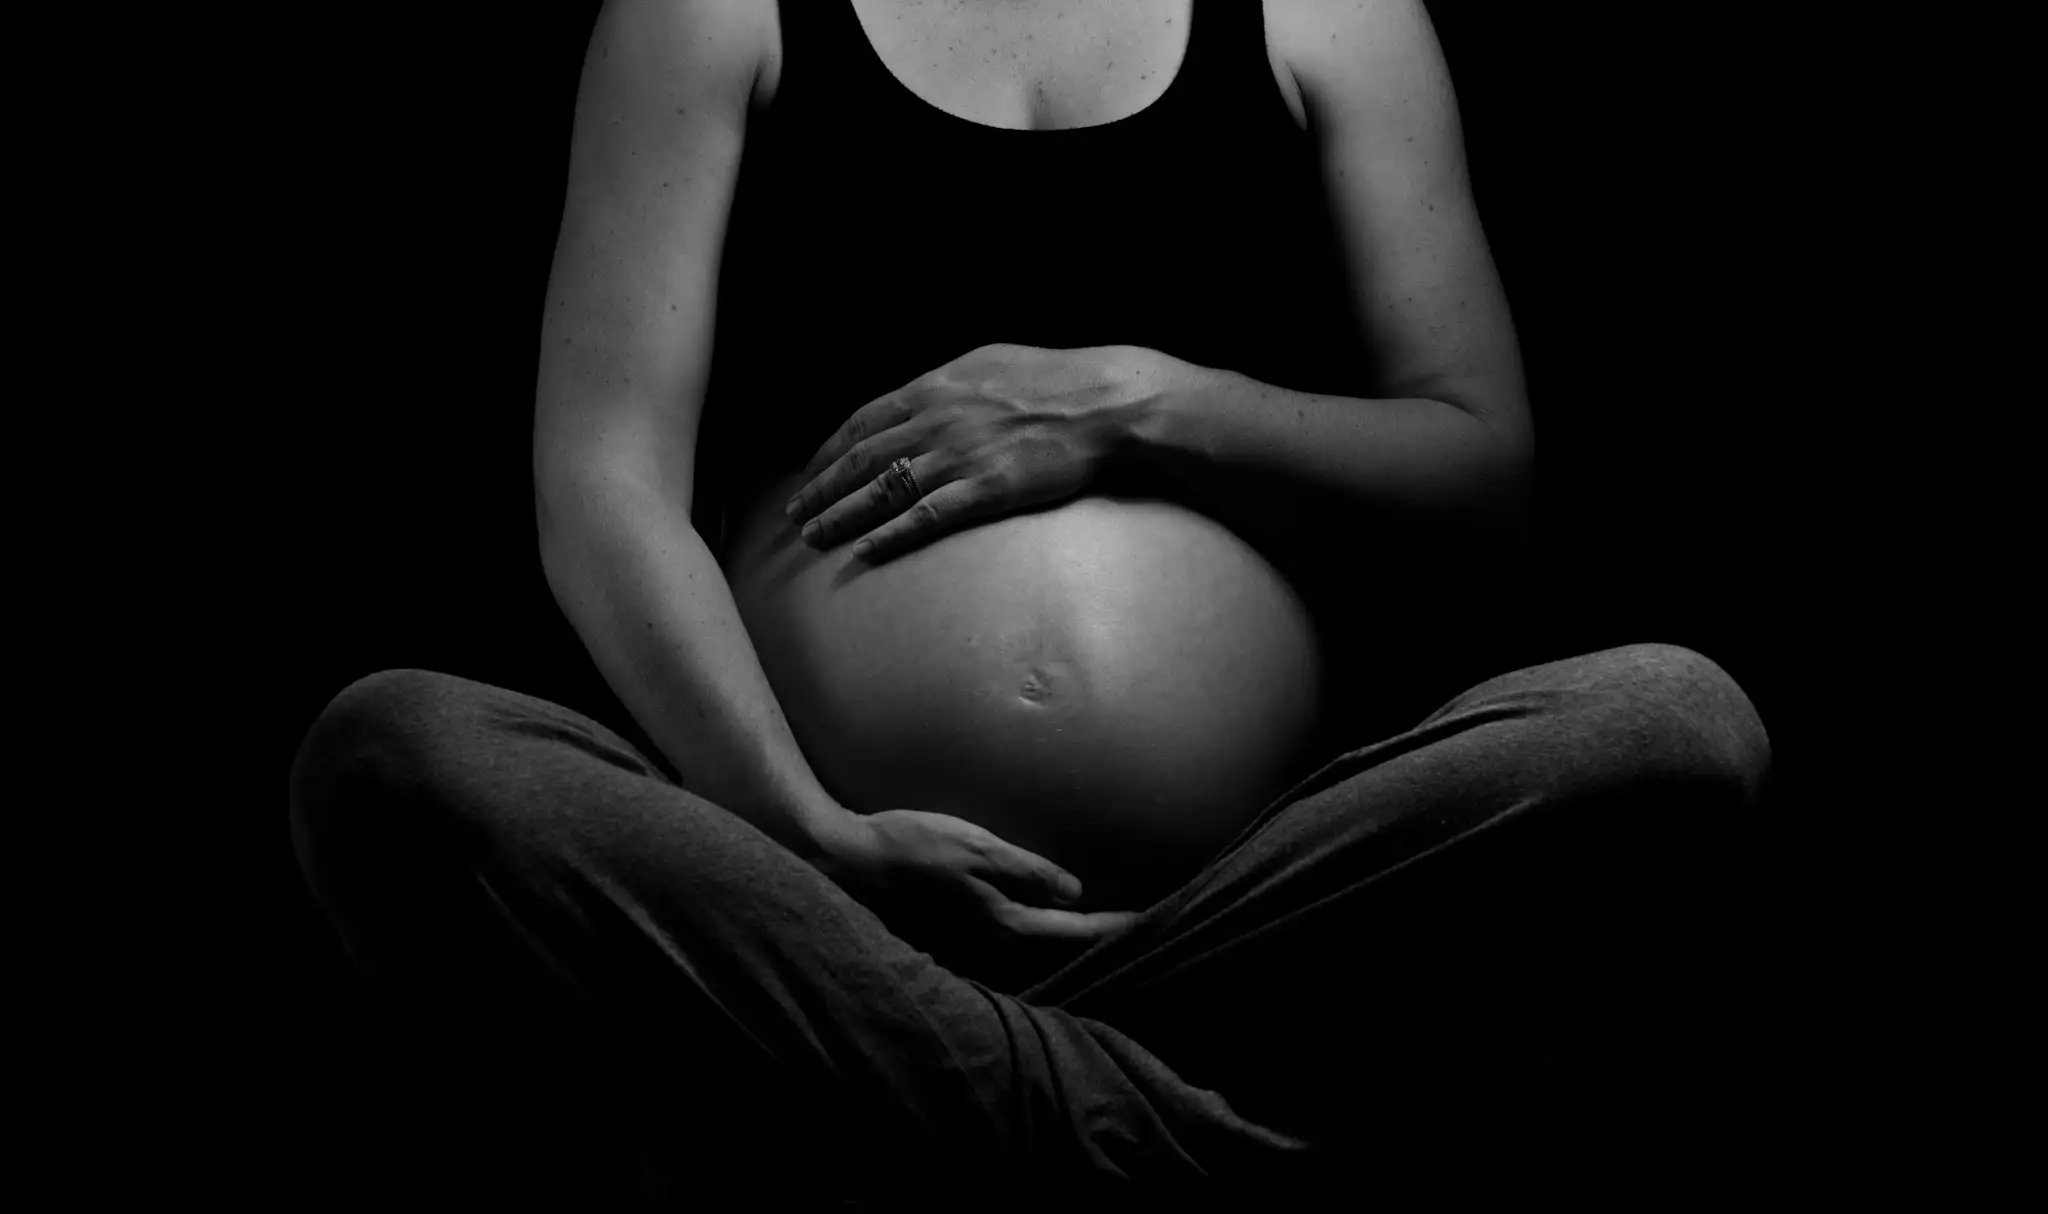 Woman at 36 weeks pregnant (no face shown)